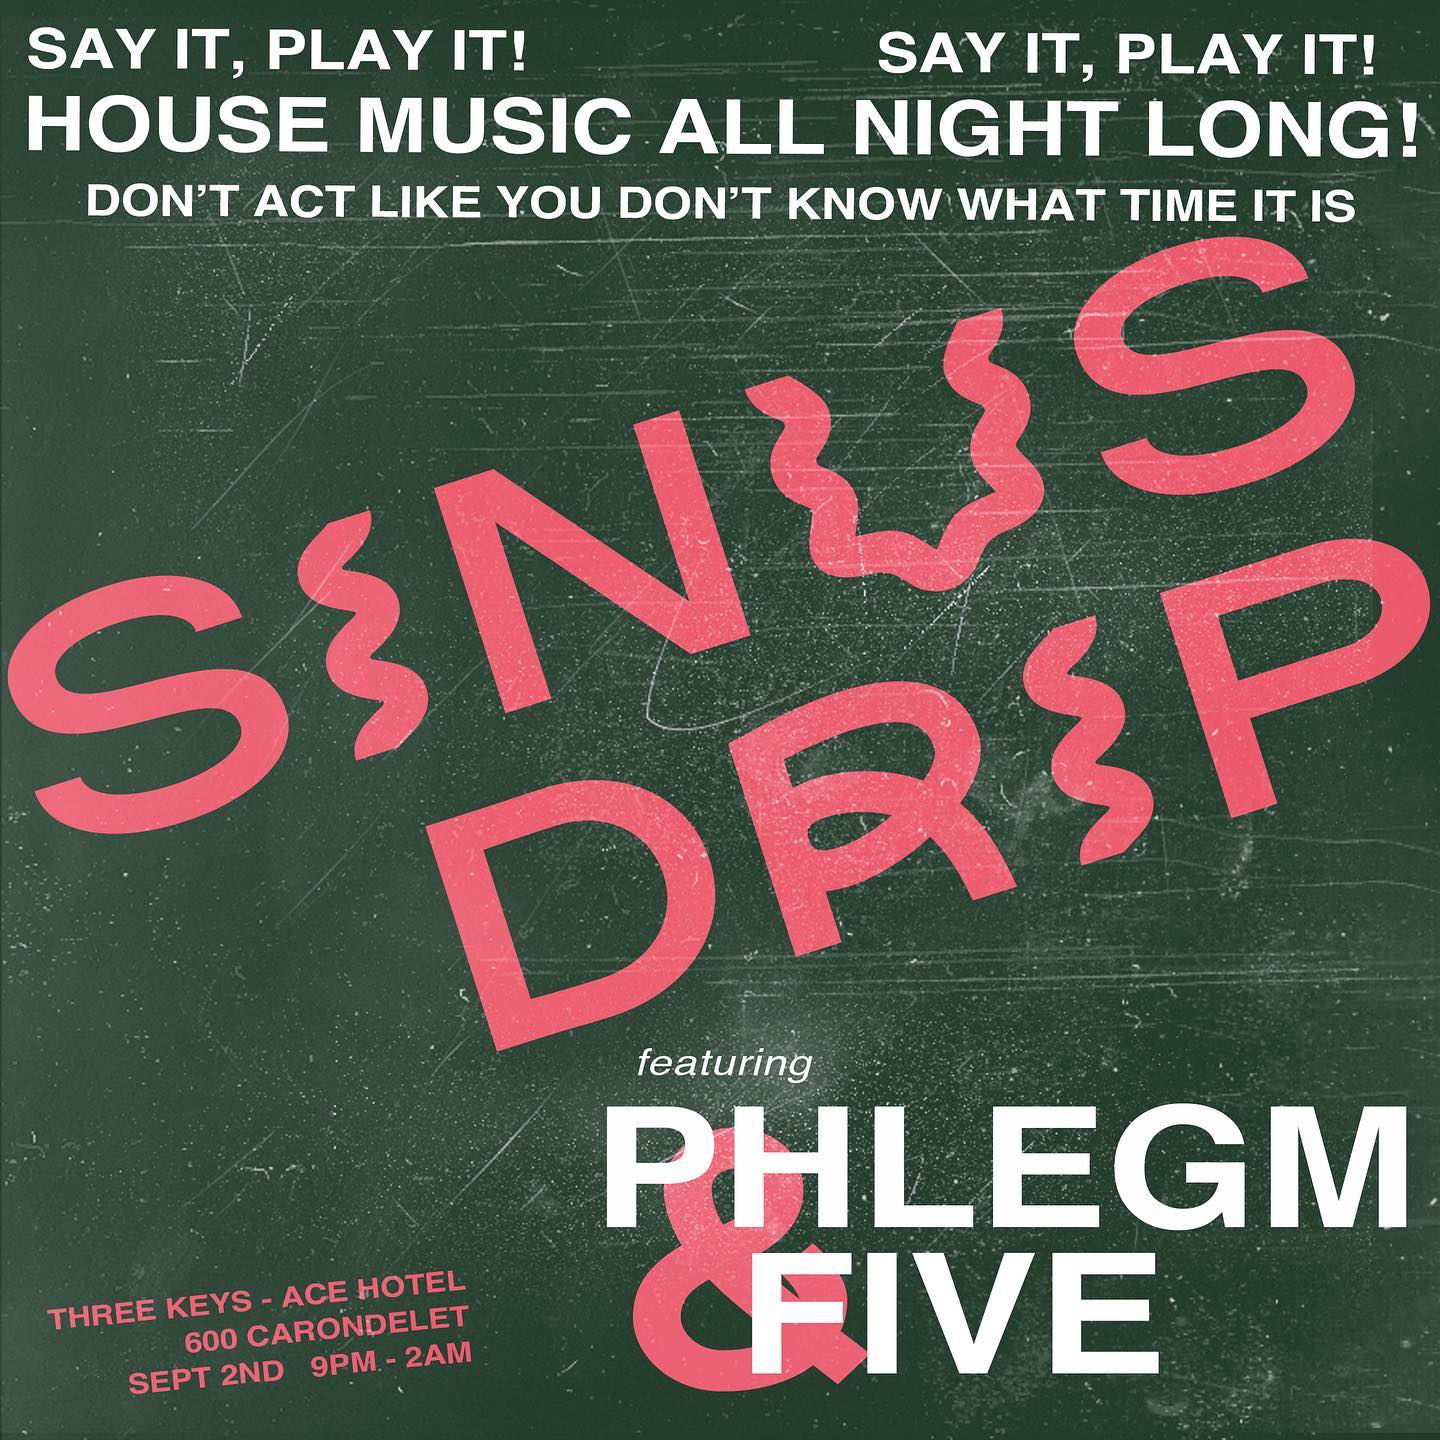 Sinus Drip with phlegm & FIVE promo graphic